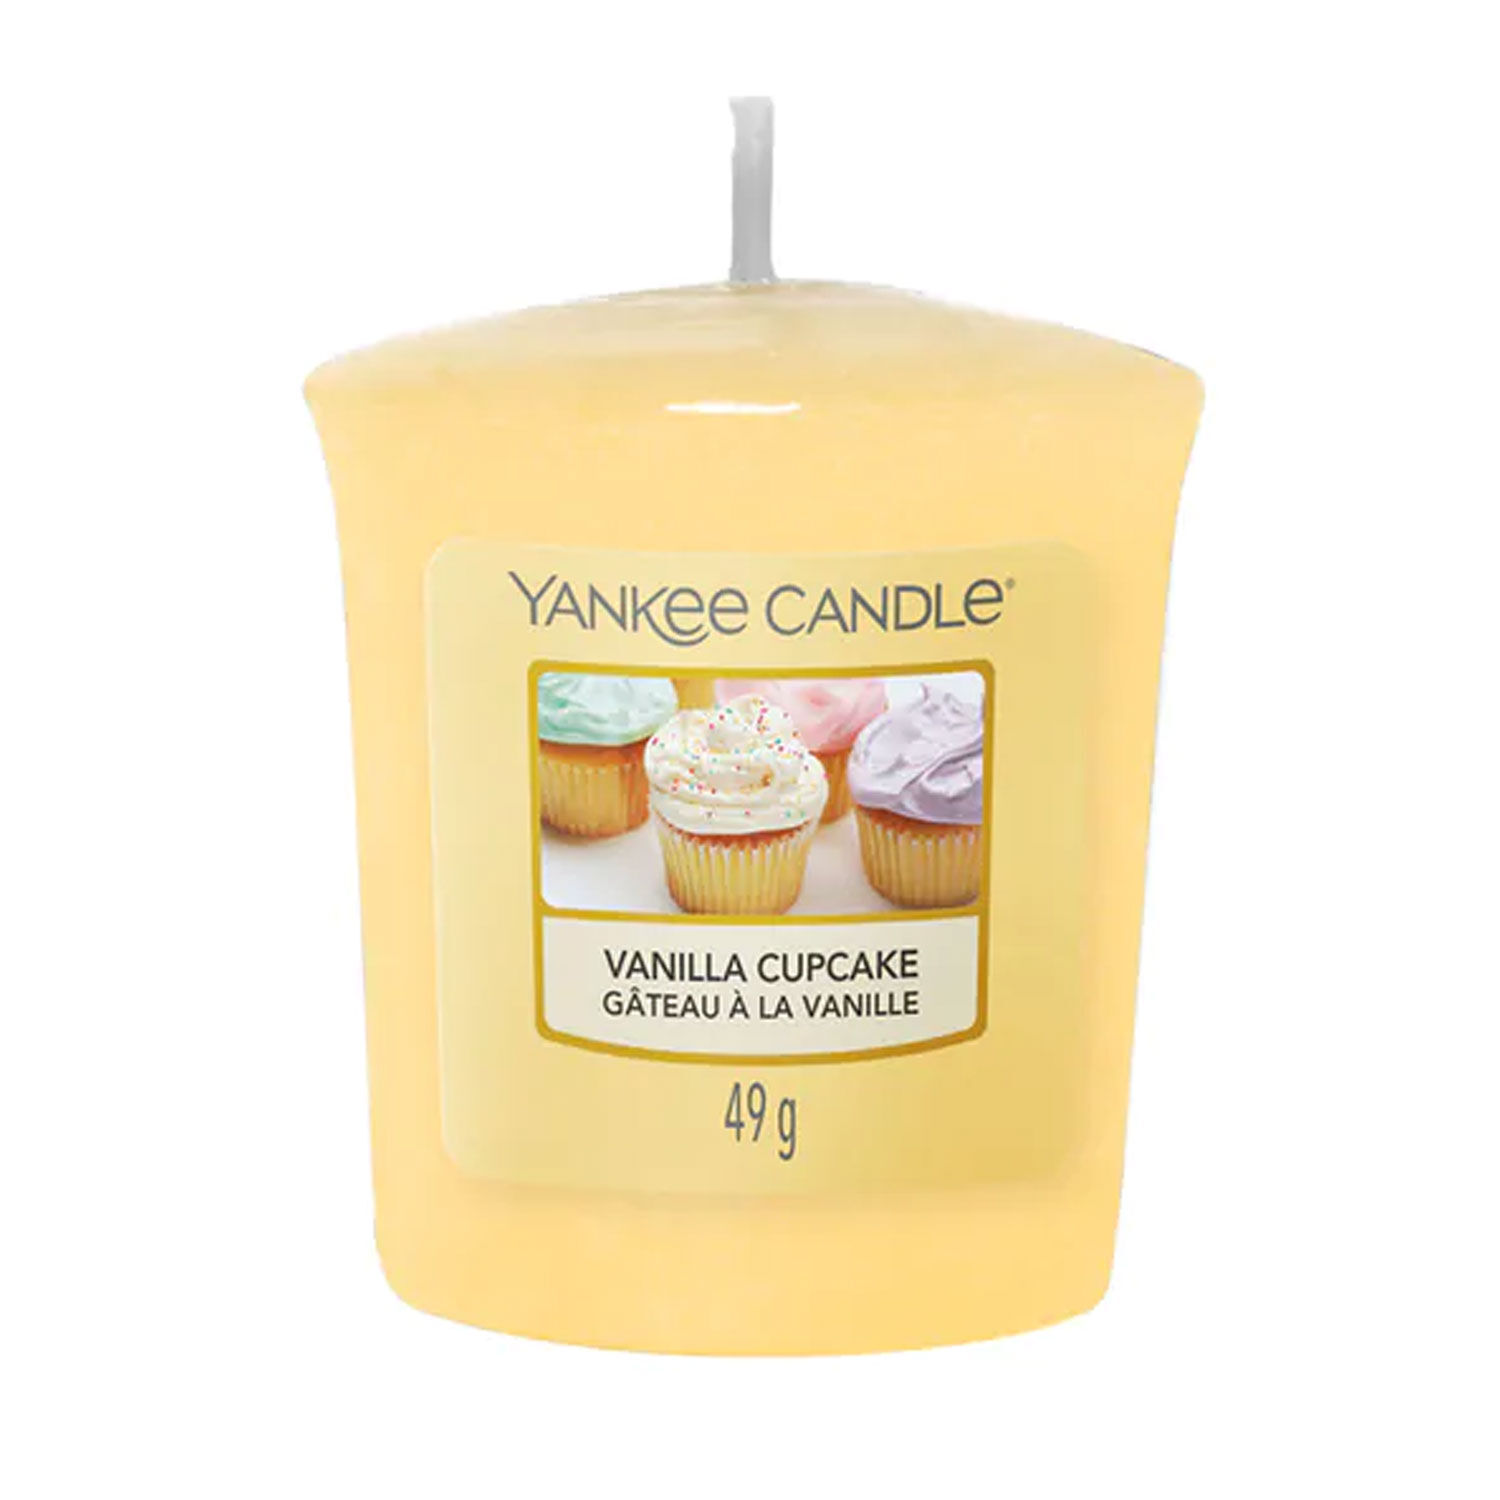 YANKEE CANDLE Vanilla Cupcake Scented Jar Candle & Reviews